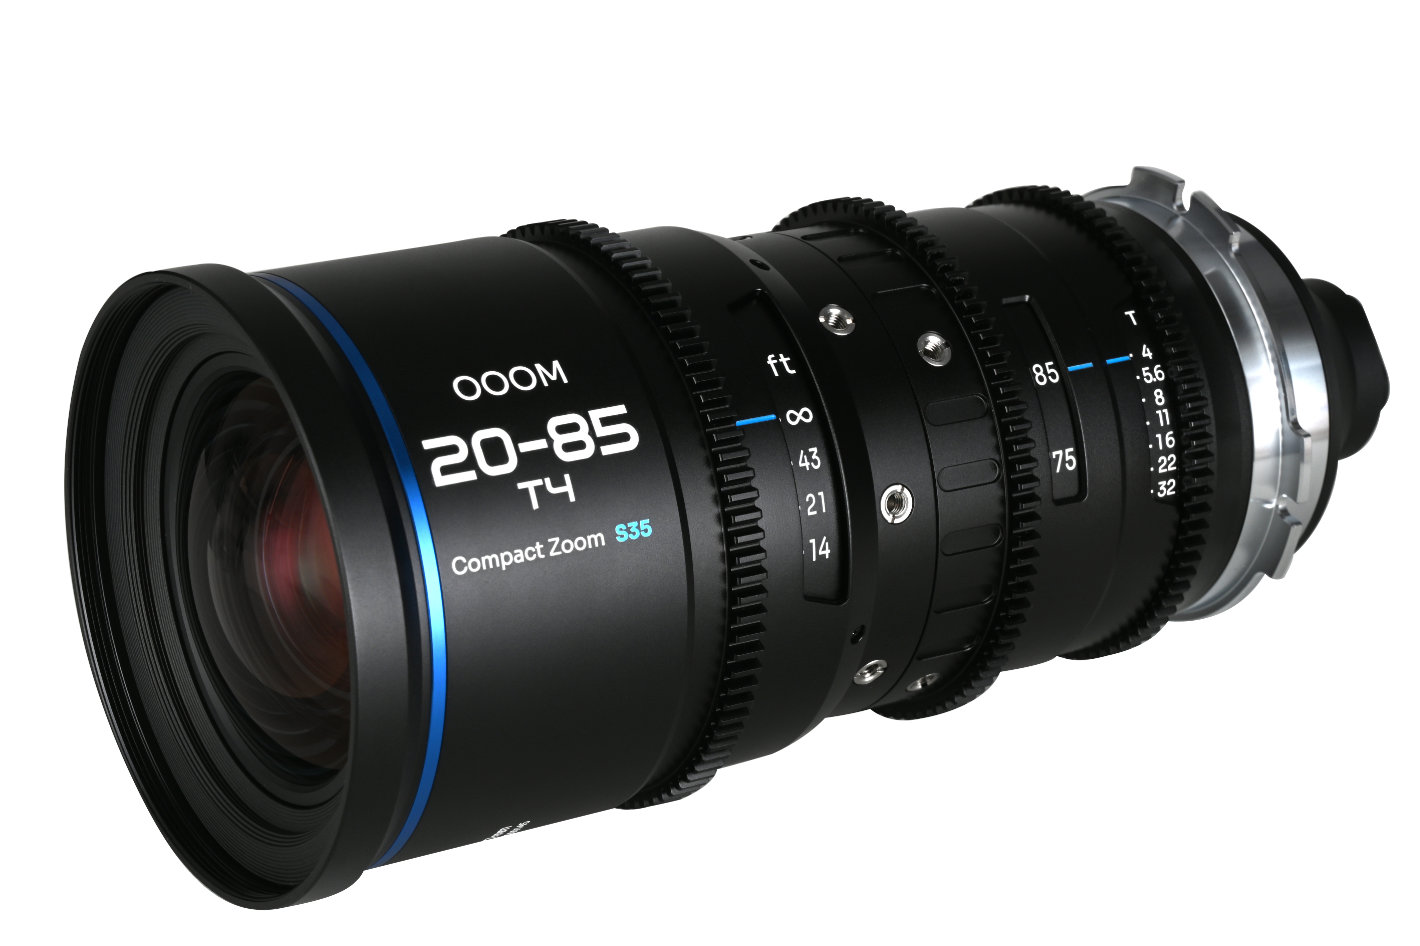 Two new Laowa OOOM Cine Zoom lenses